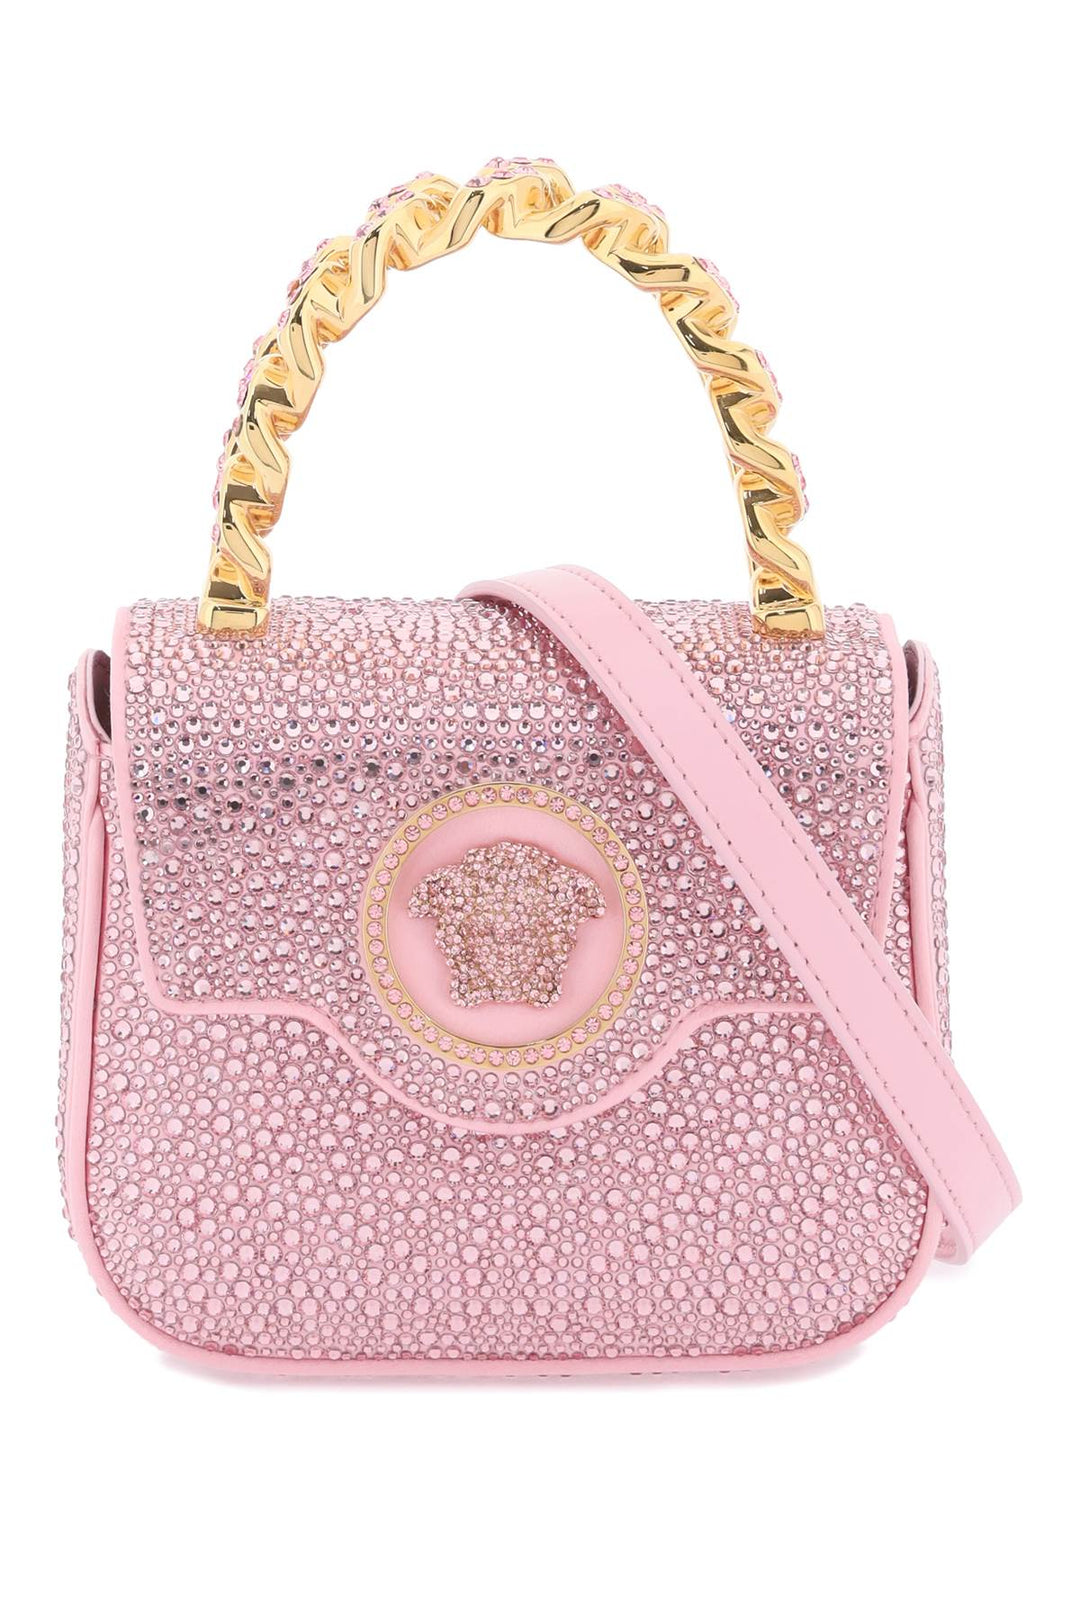 Versace La Medusa Handbag With Crystals   Rosa